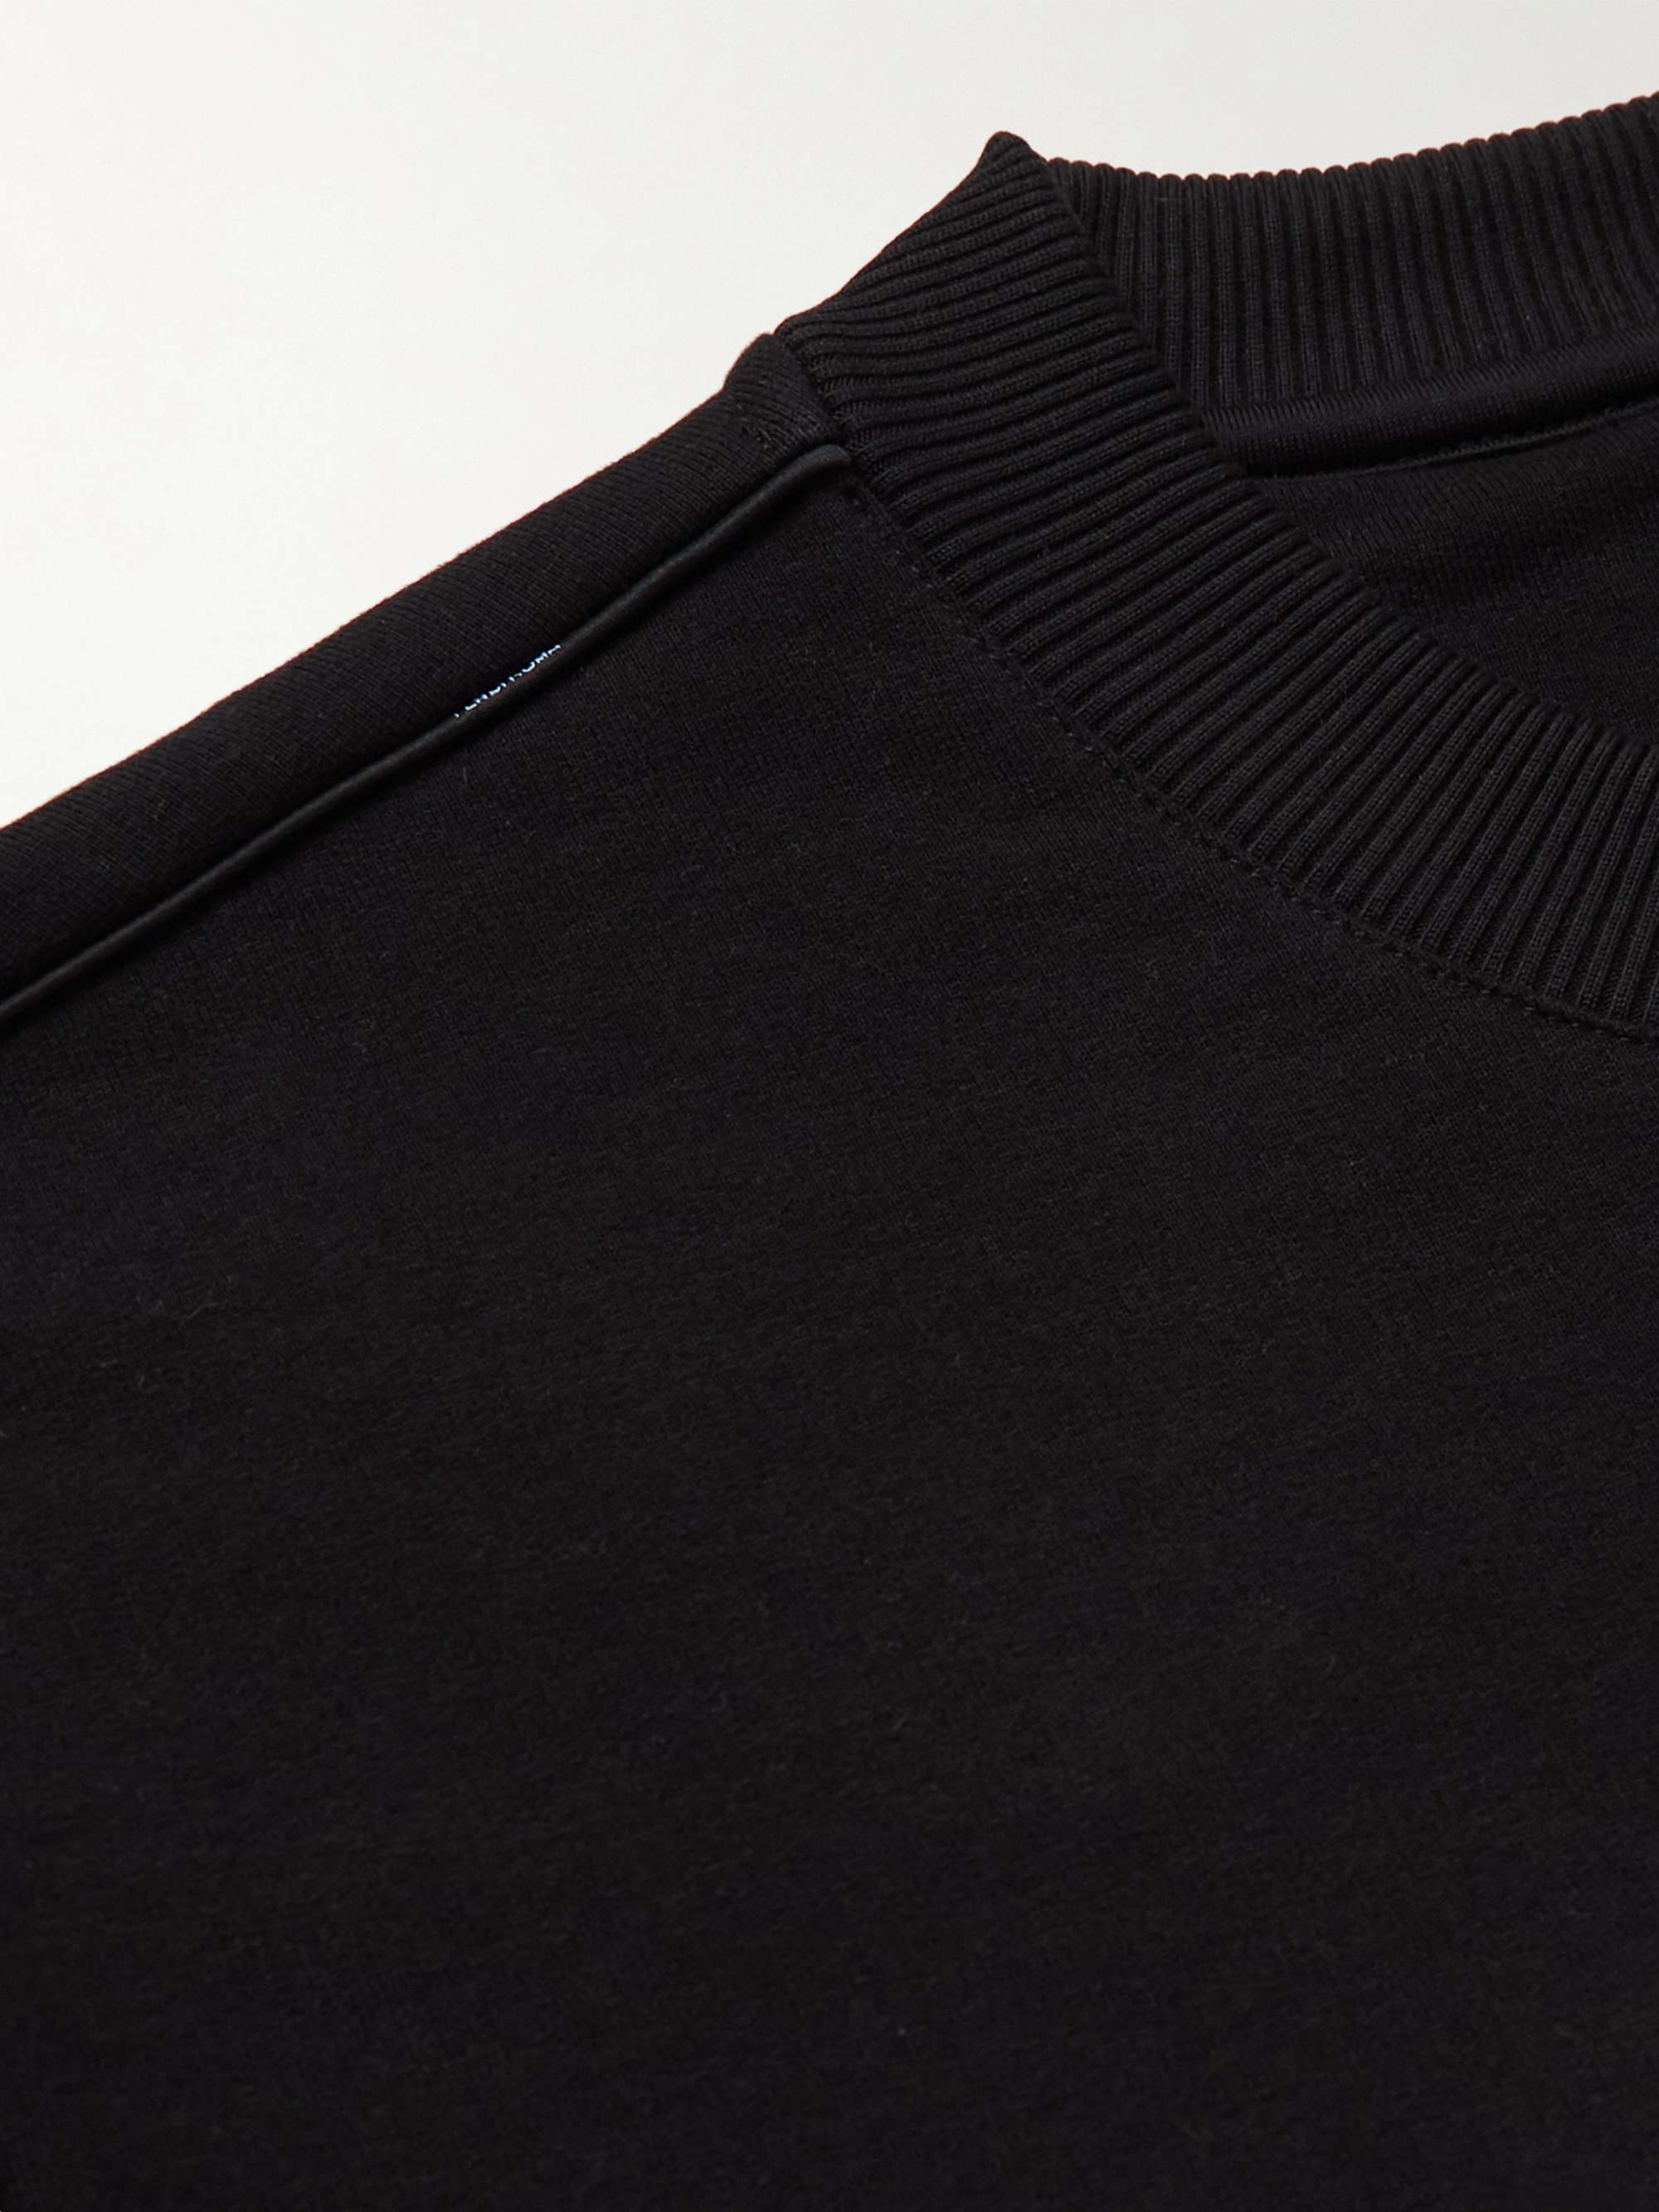 FENDI Logo-Debossed Colour-Block Cotton-Jersey T-Shirt